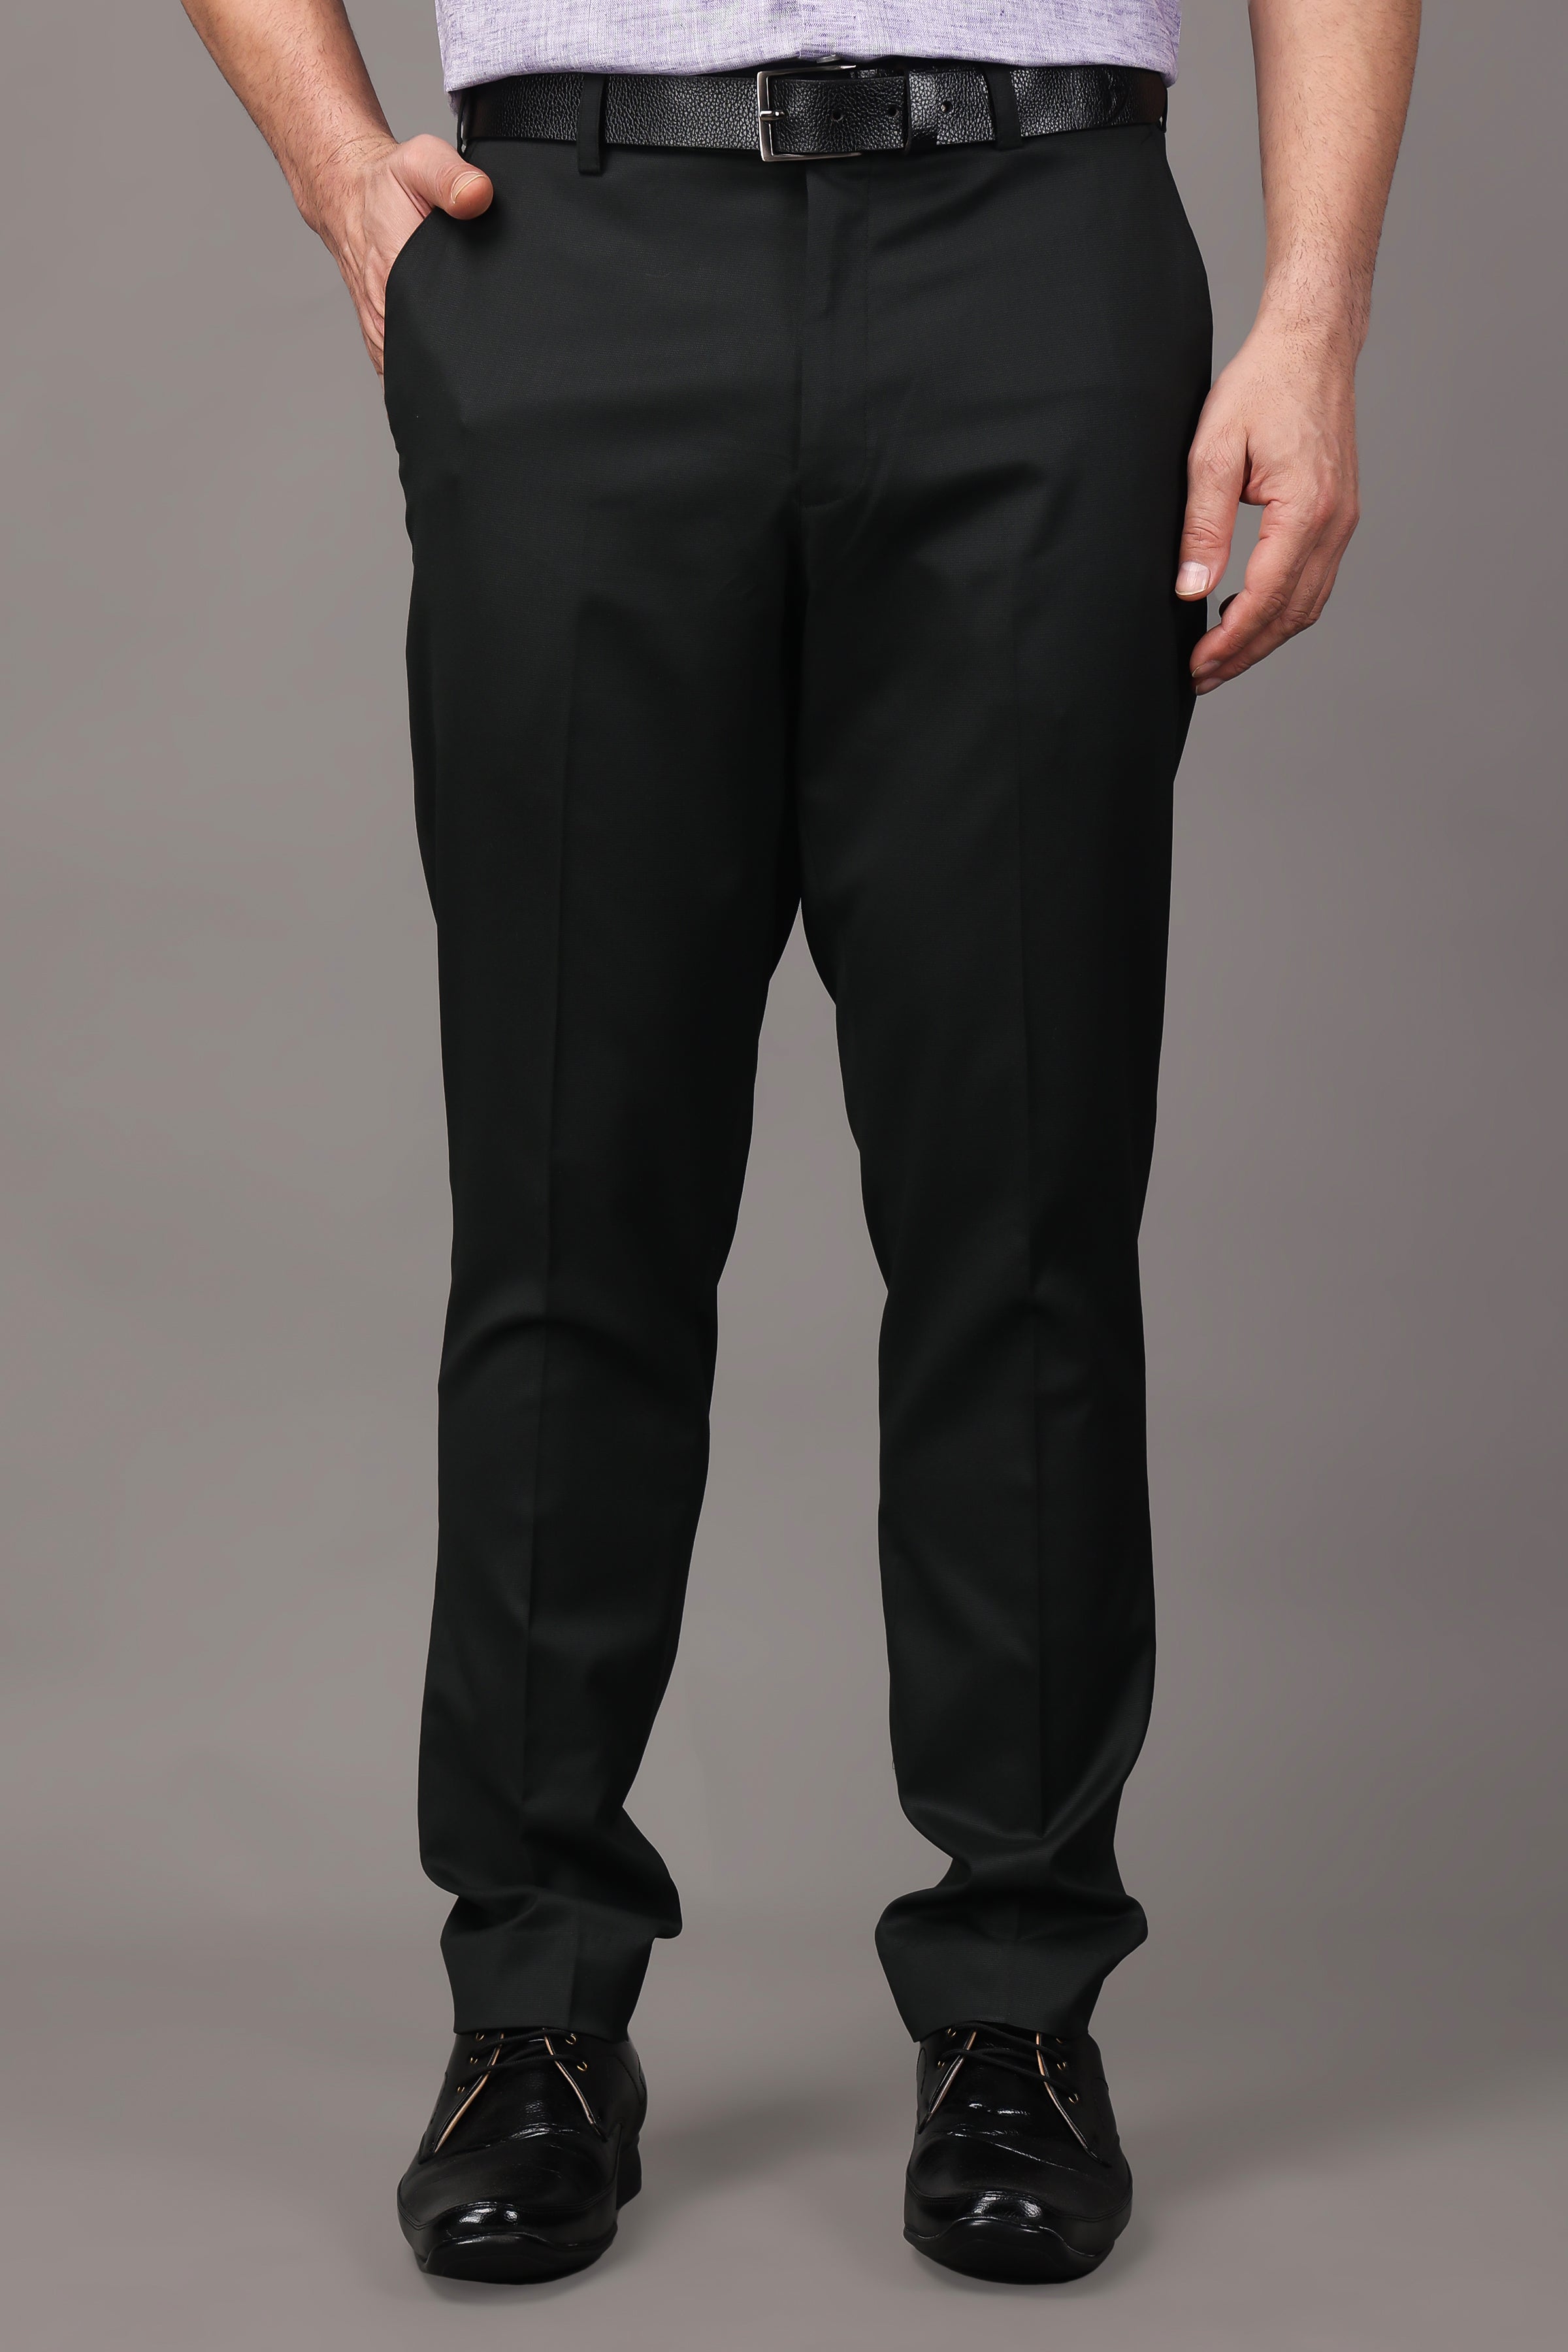 Formal Trouser: Buy MenBlackCotton RayonFormal Trouser Online - Cliths.com